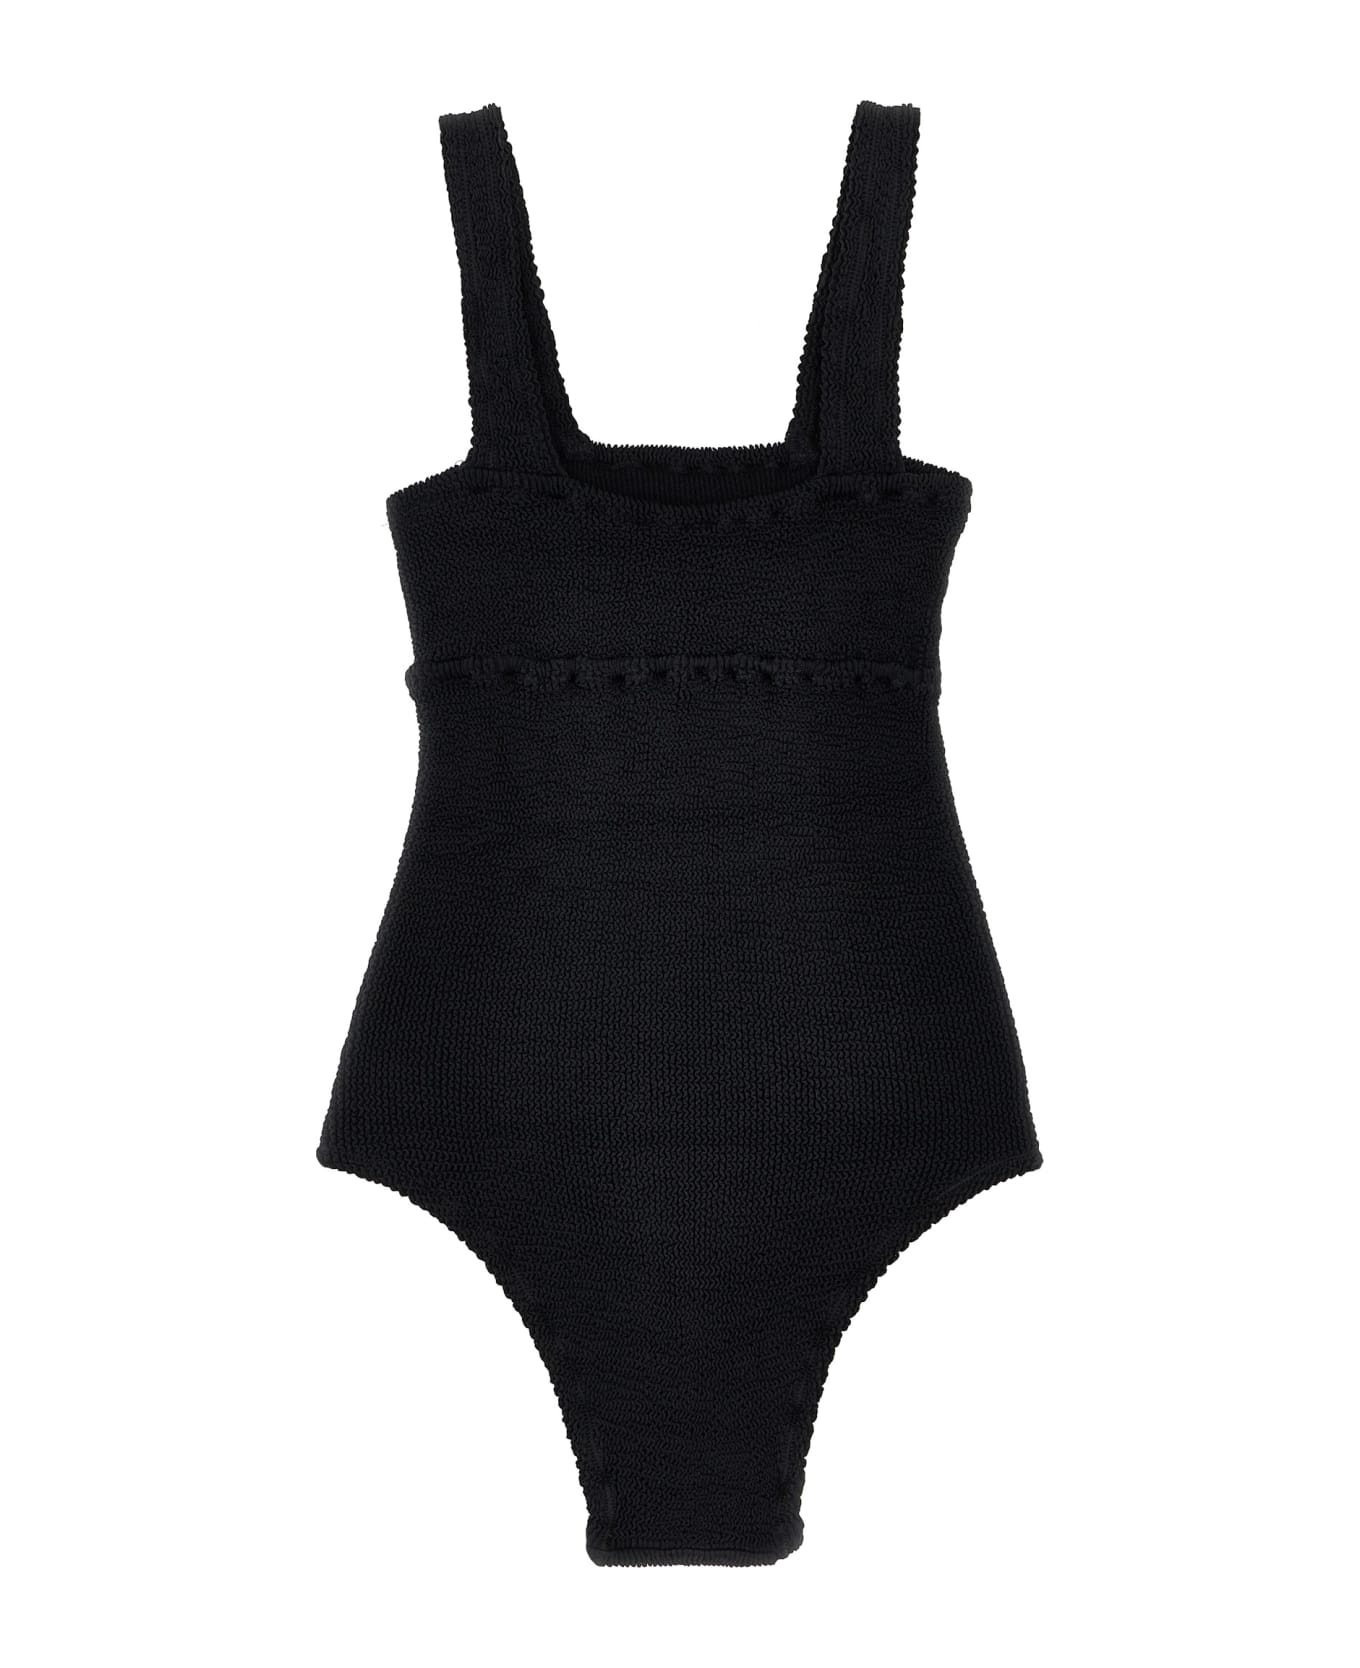 Reina Olga 'lucia' One-piece Swimsuit - Black  